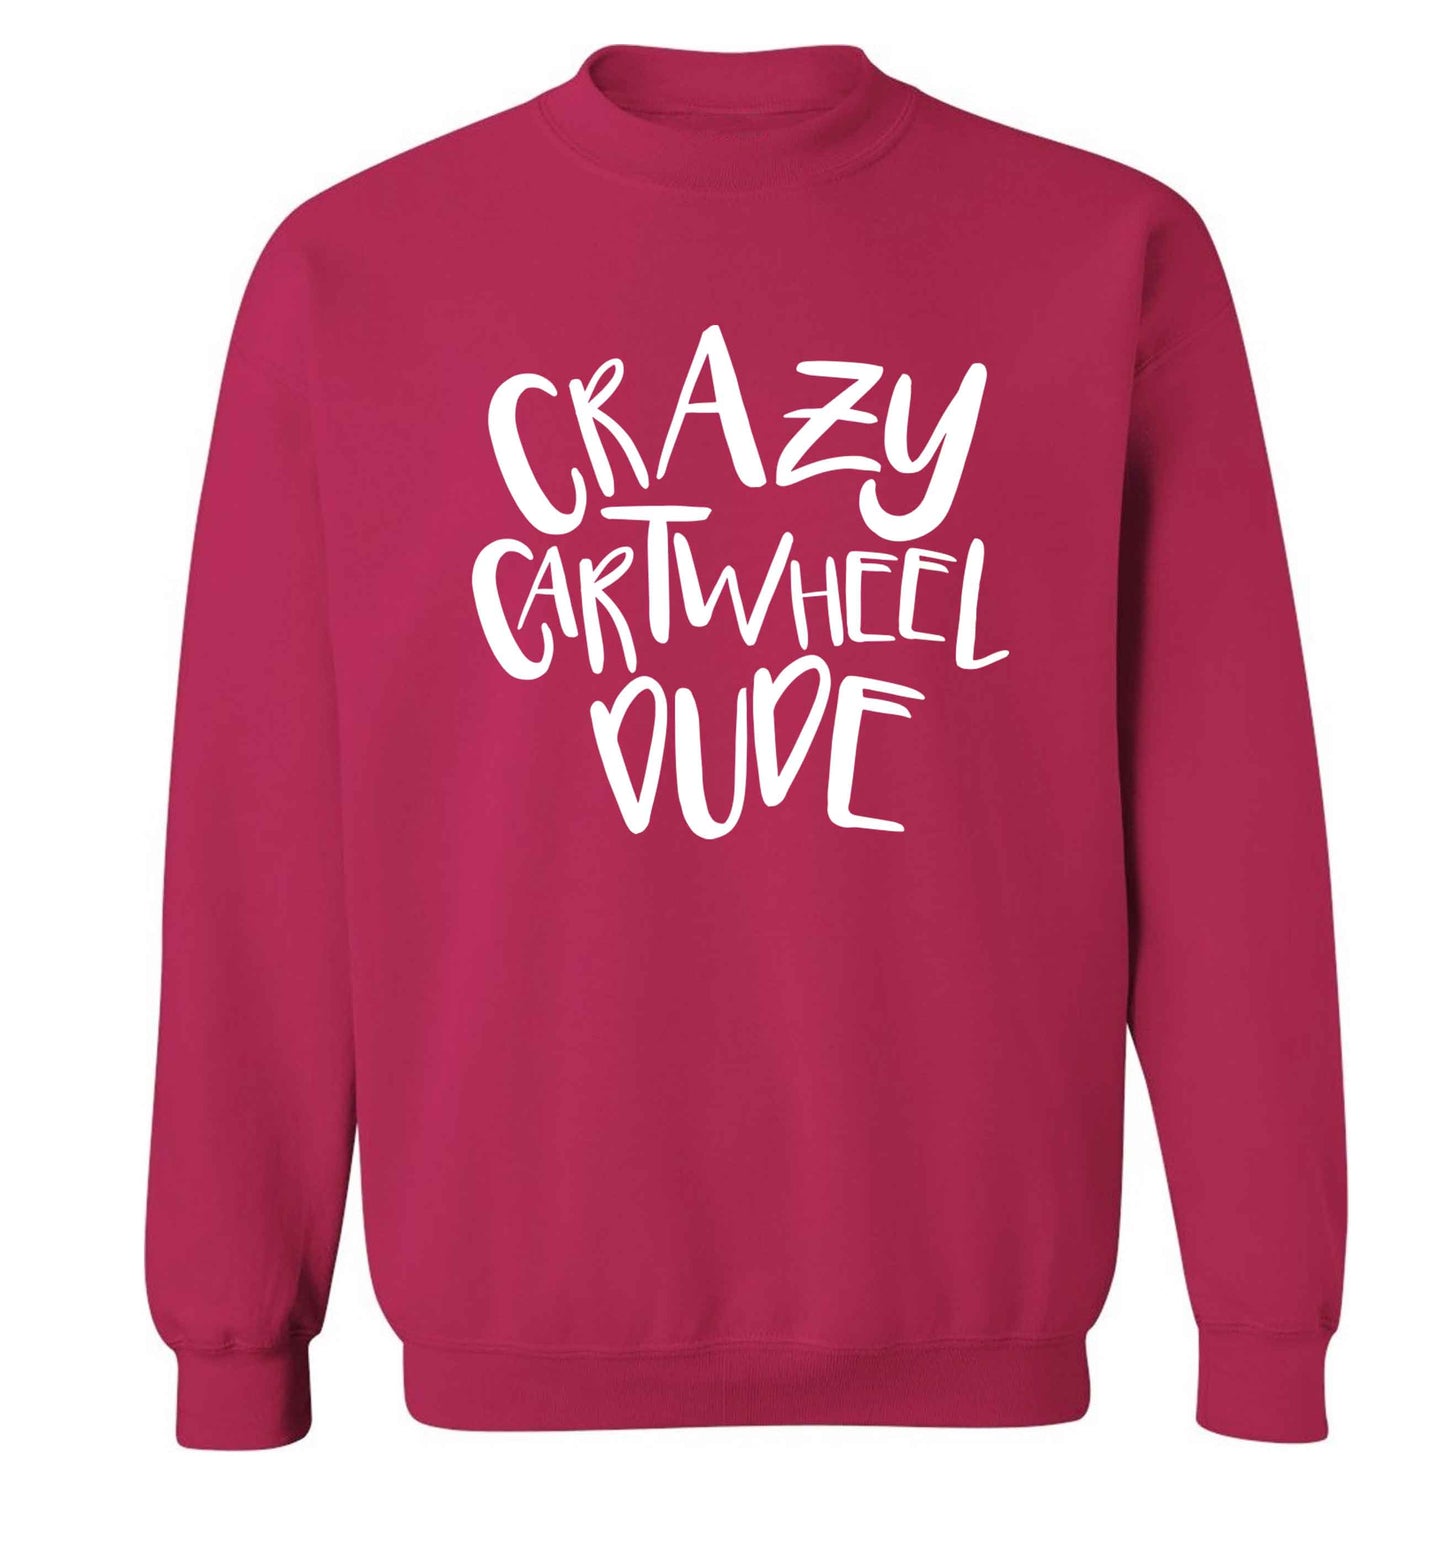 Crazy cartwheel dude Adult's unisex pink Sweater 2XL